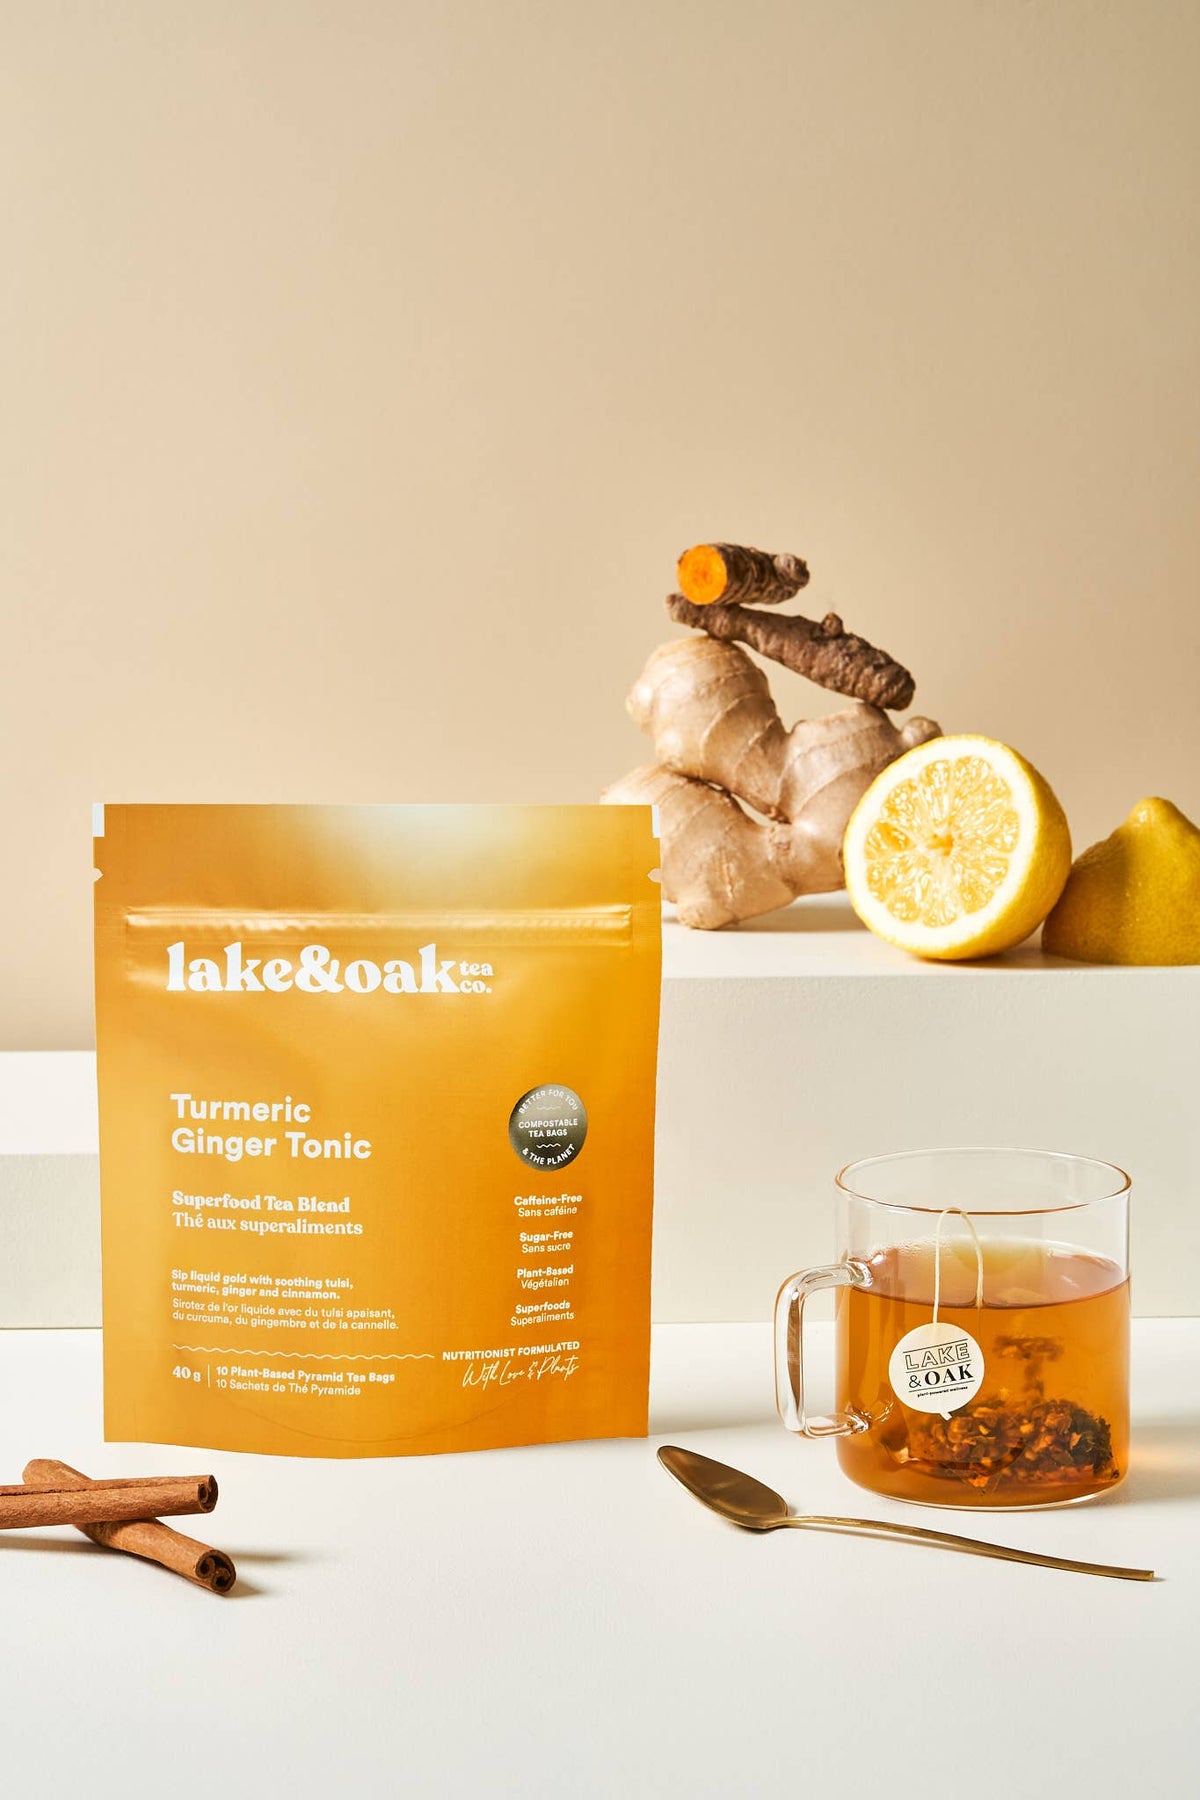 Lake & Oak Tea Co. - Turmeric Ginger Tonic - Superfood Tea